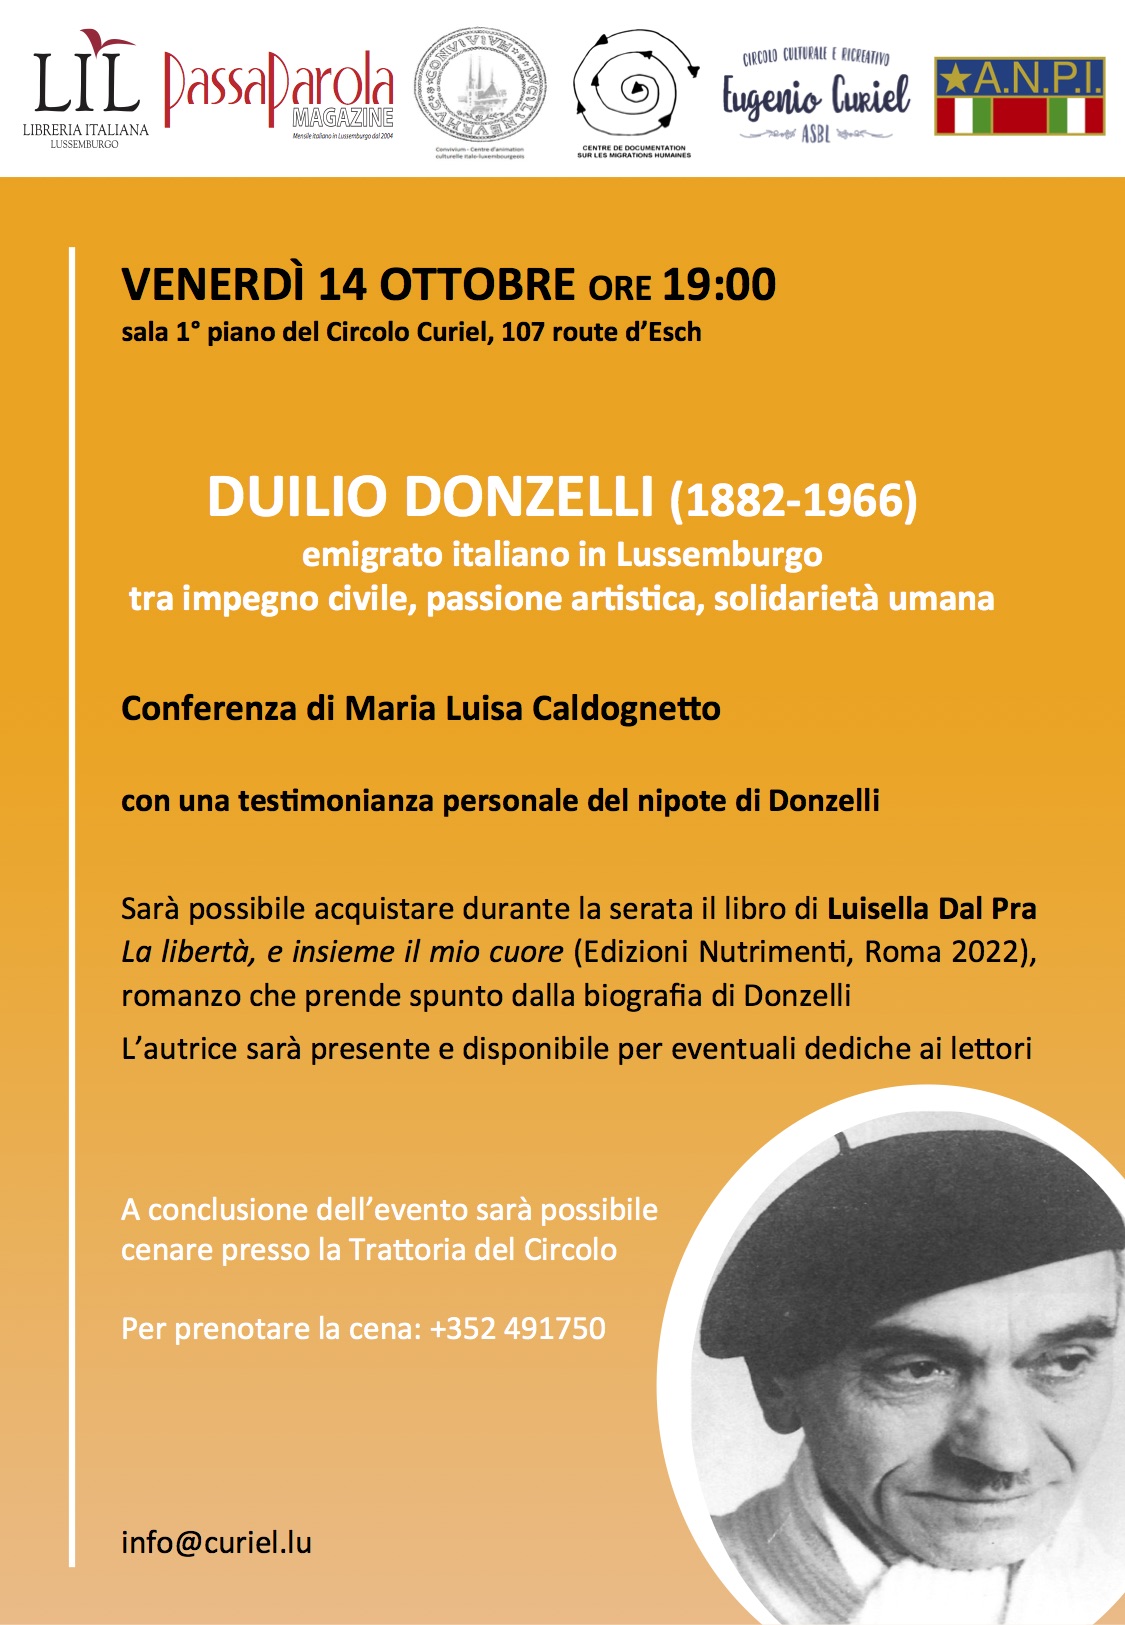 Duilio Donzelli